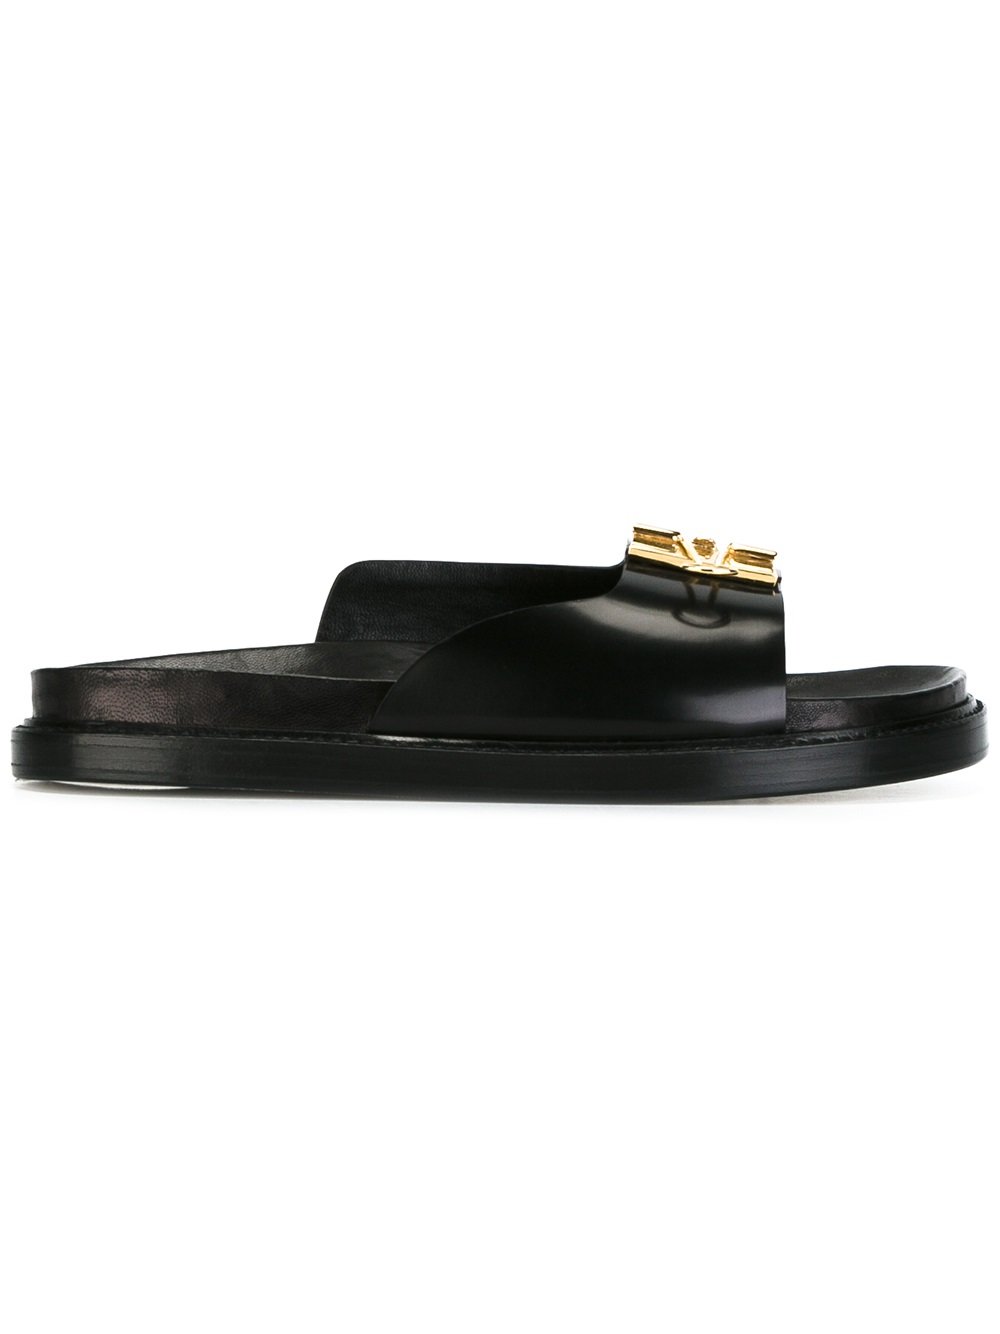 Off-White binder clip flip flops BLACK NO COLOR Women Shoes